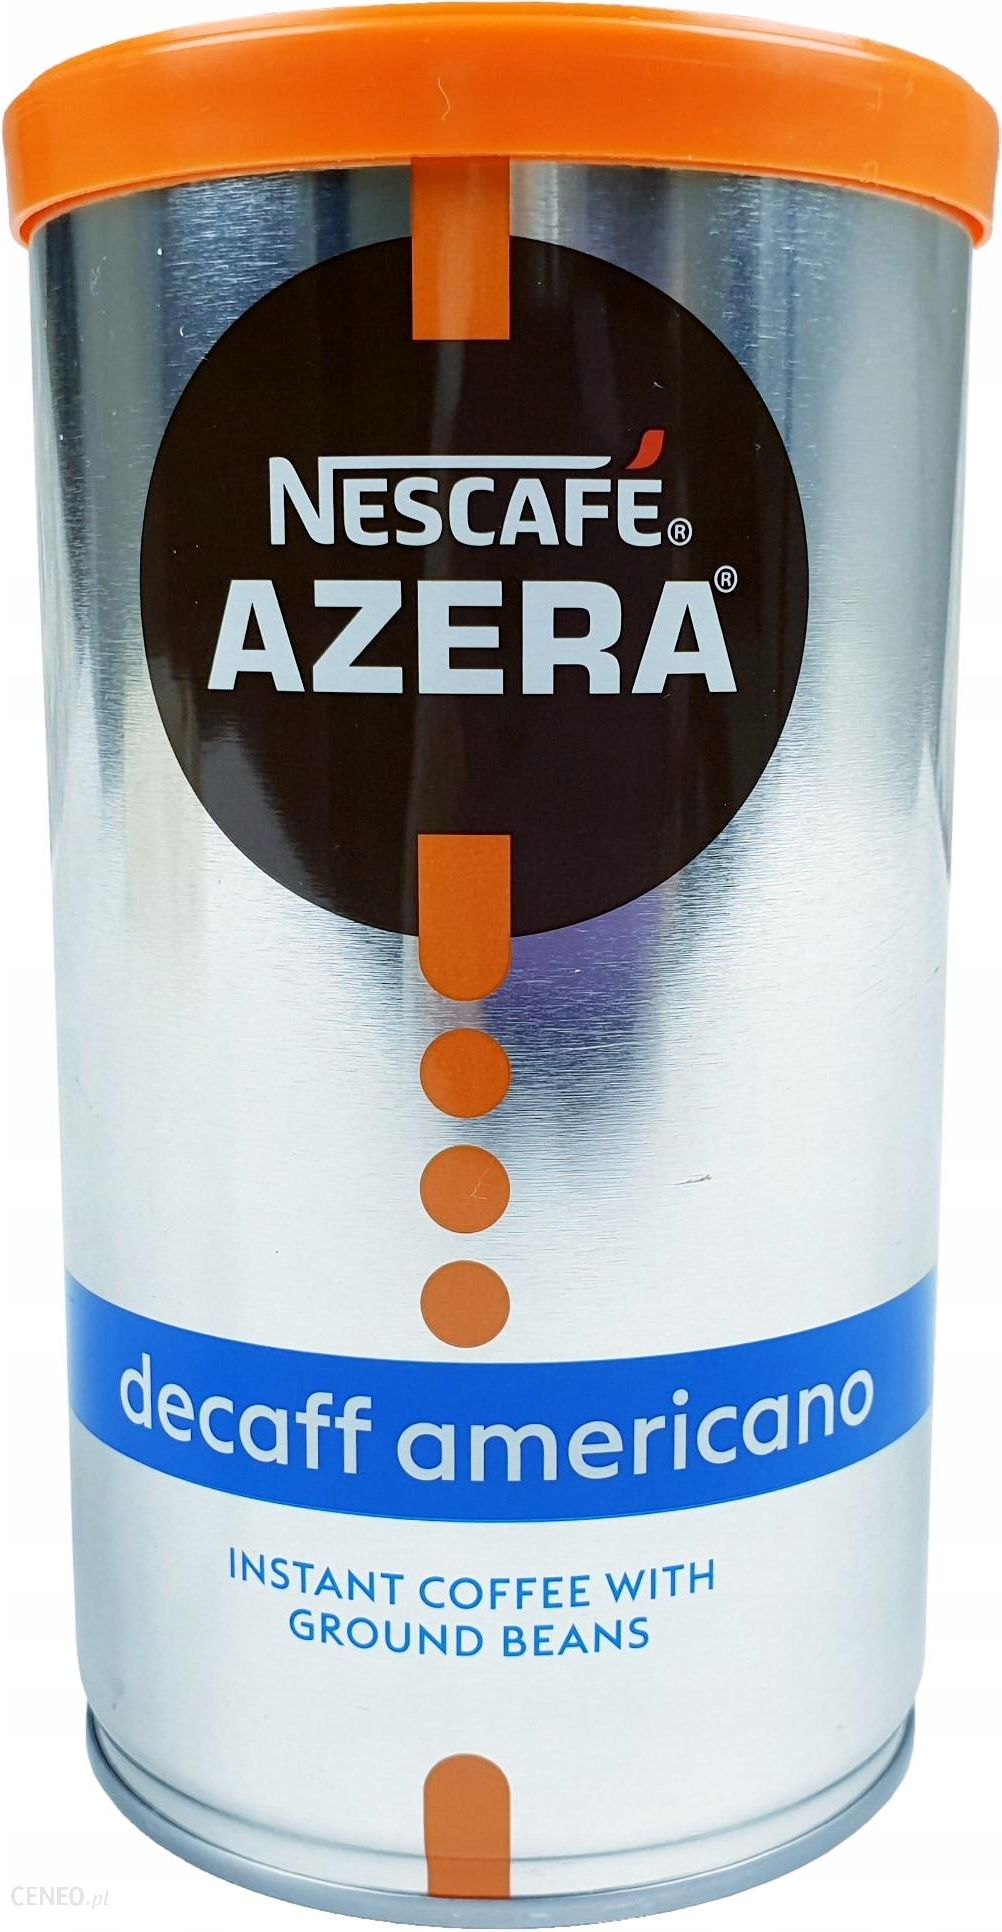 Nescafe Azera Decaff Americano 90g Bezkofeinowa